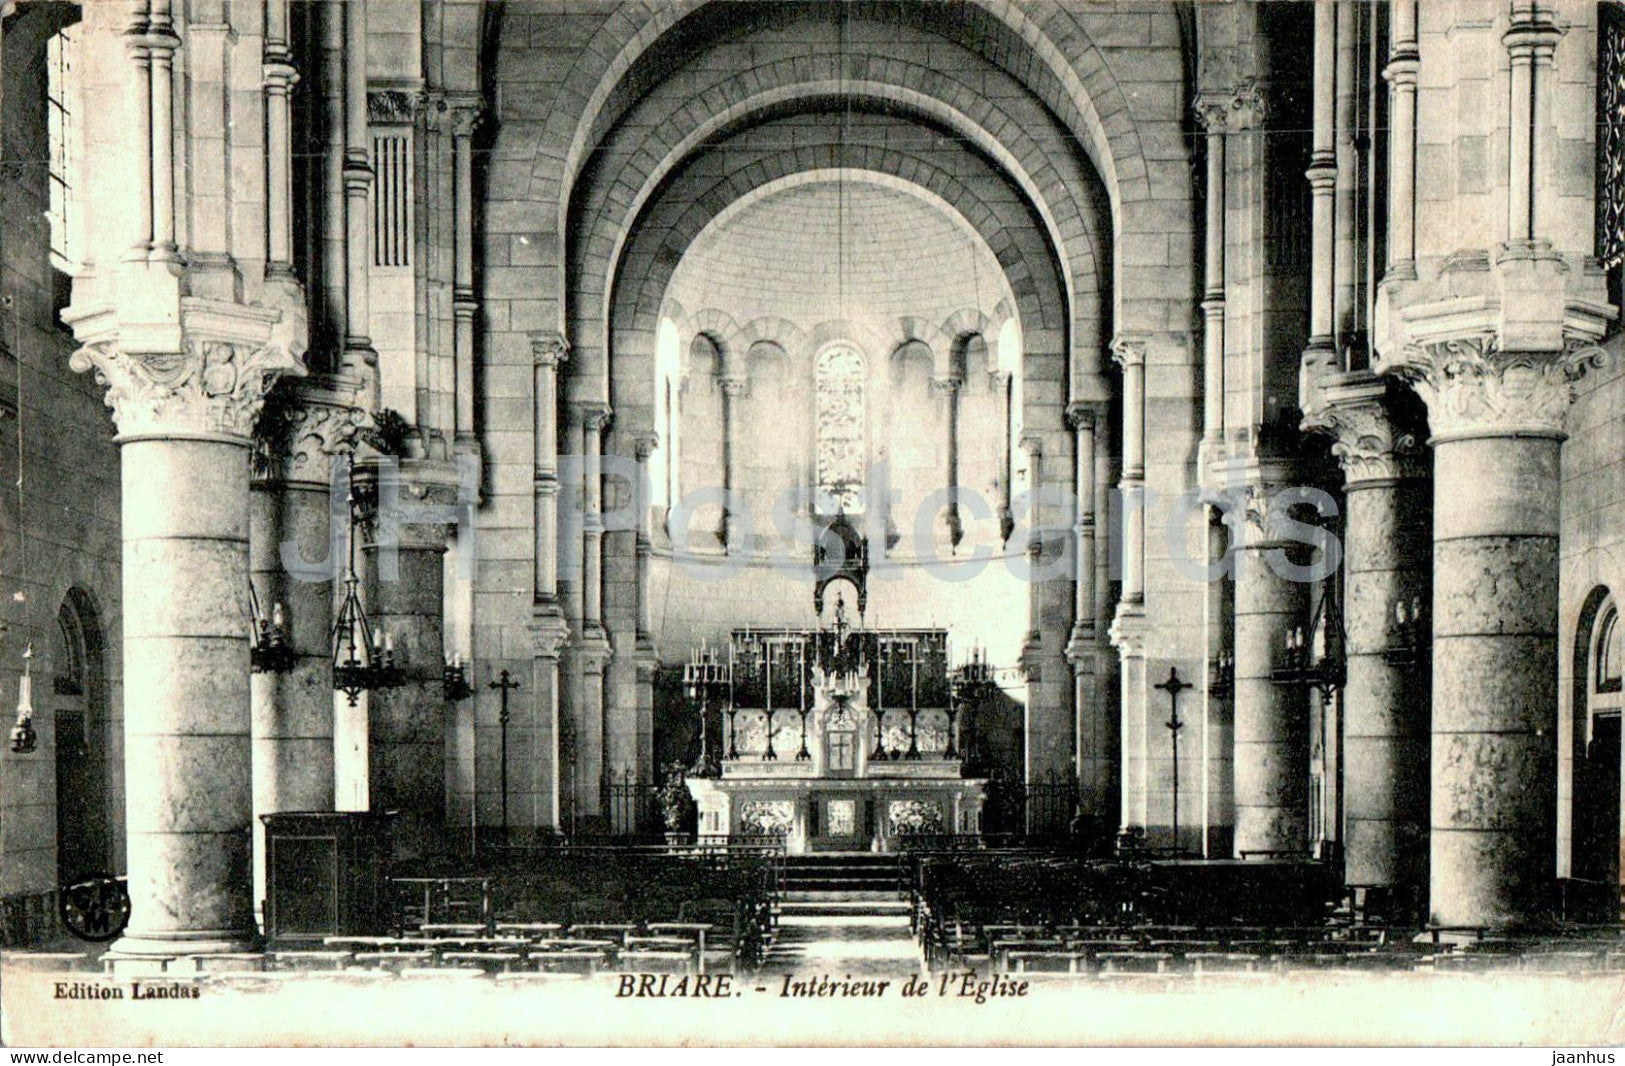 Briare - Interieur de l'Eglise - church - old postcard - 1911 - France - used - JH Postcards